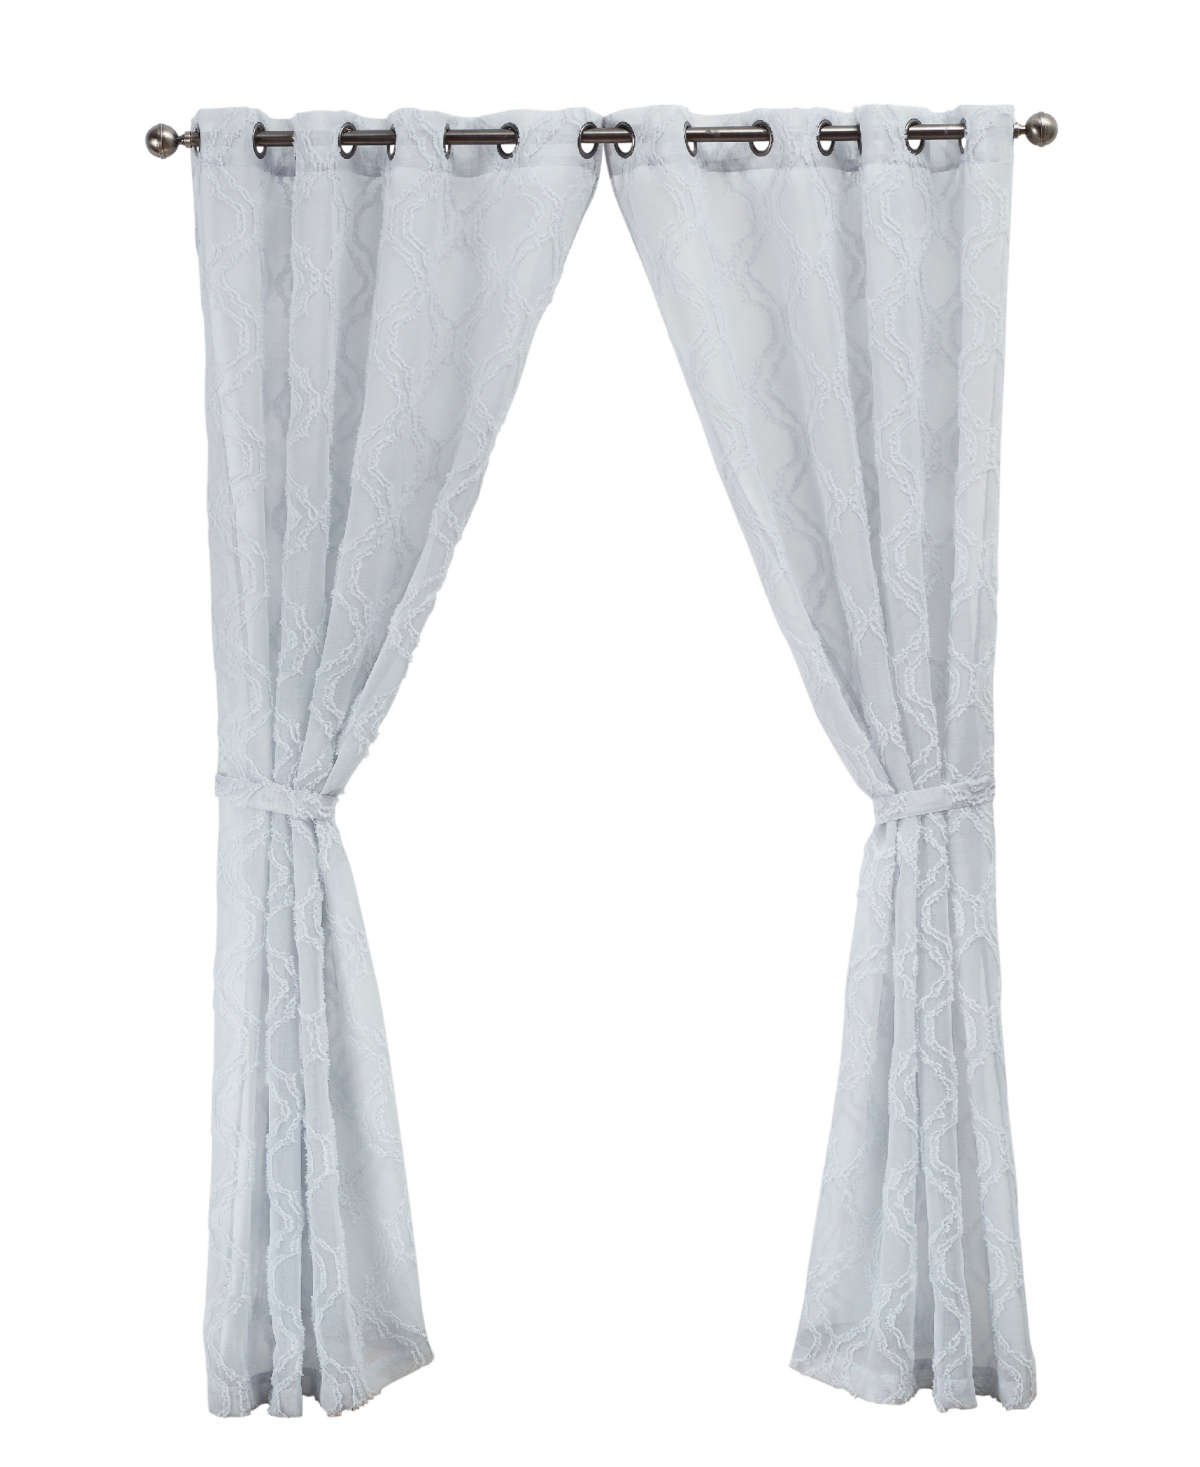 Jessica Simpson Everyn Sheer Embellished Grommet Window Curtain Panel Pair With Tiebacks, 52" X 96" In Light Gray